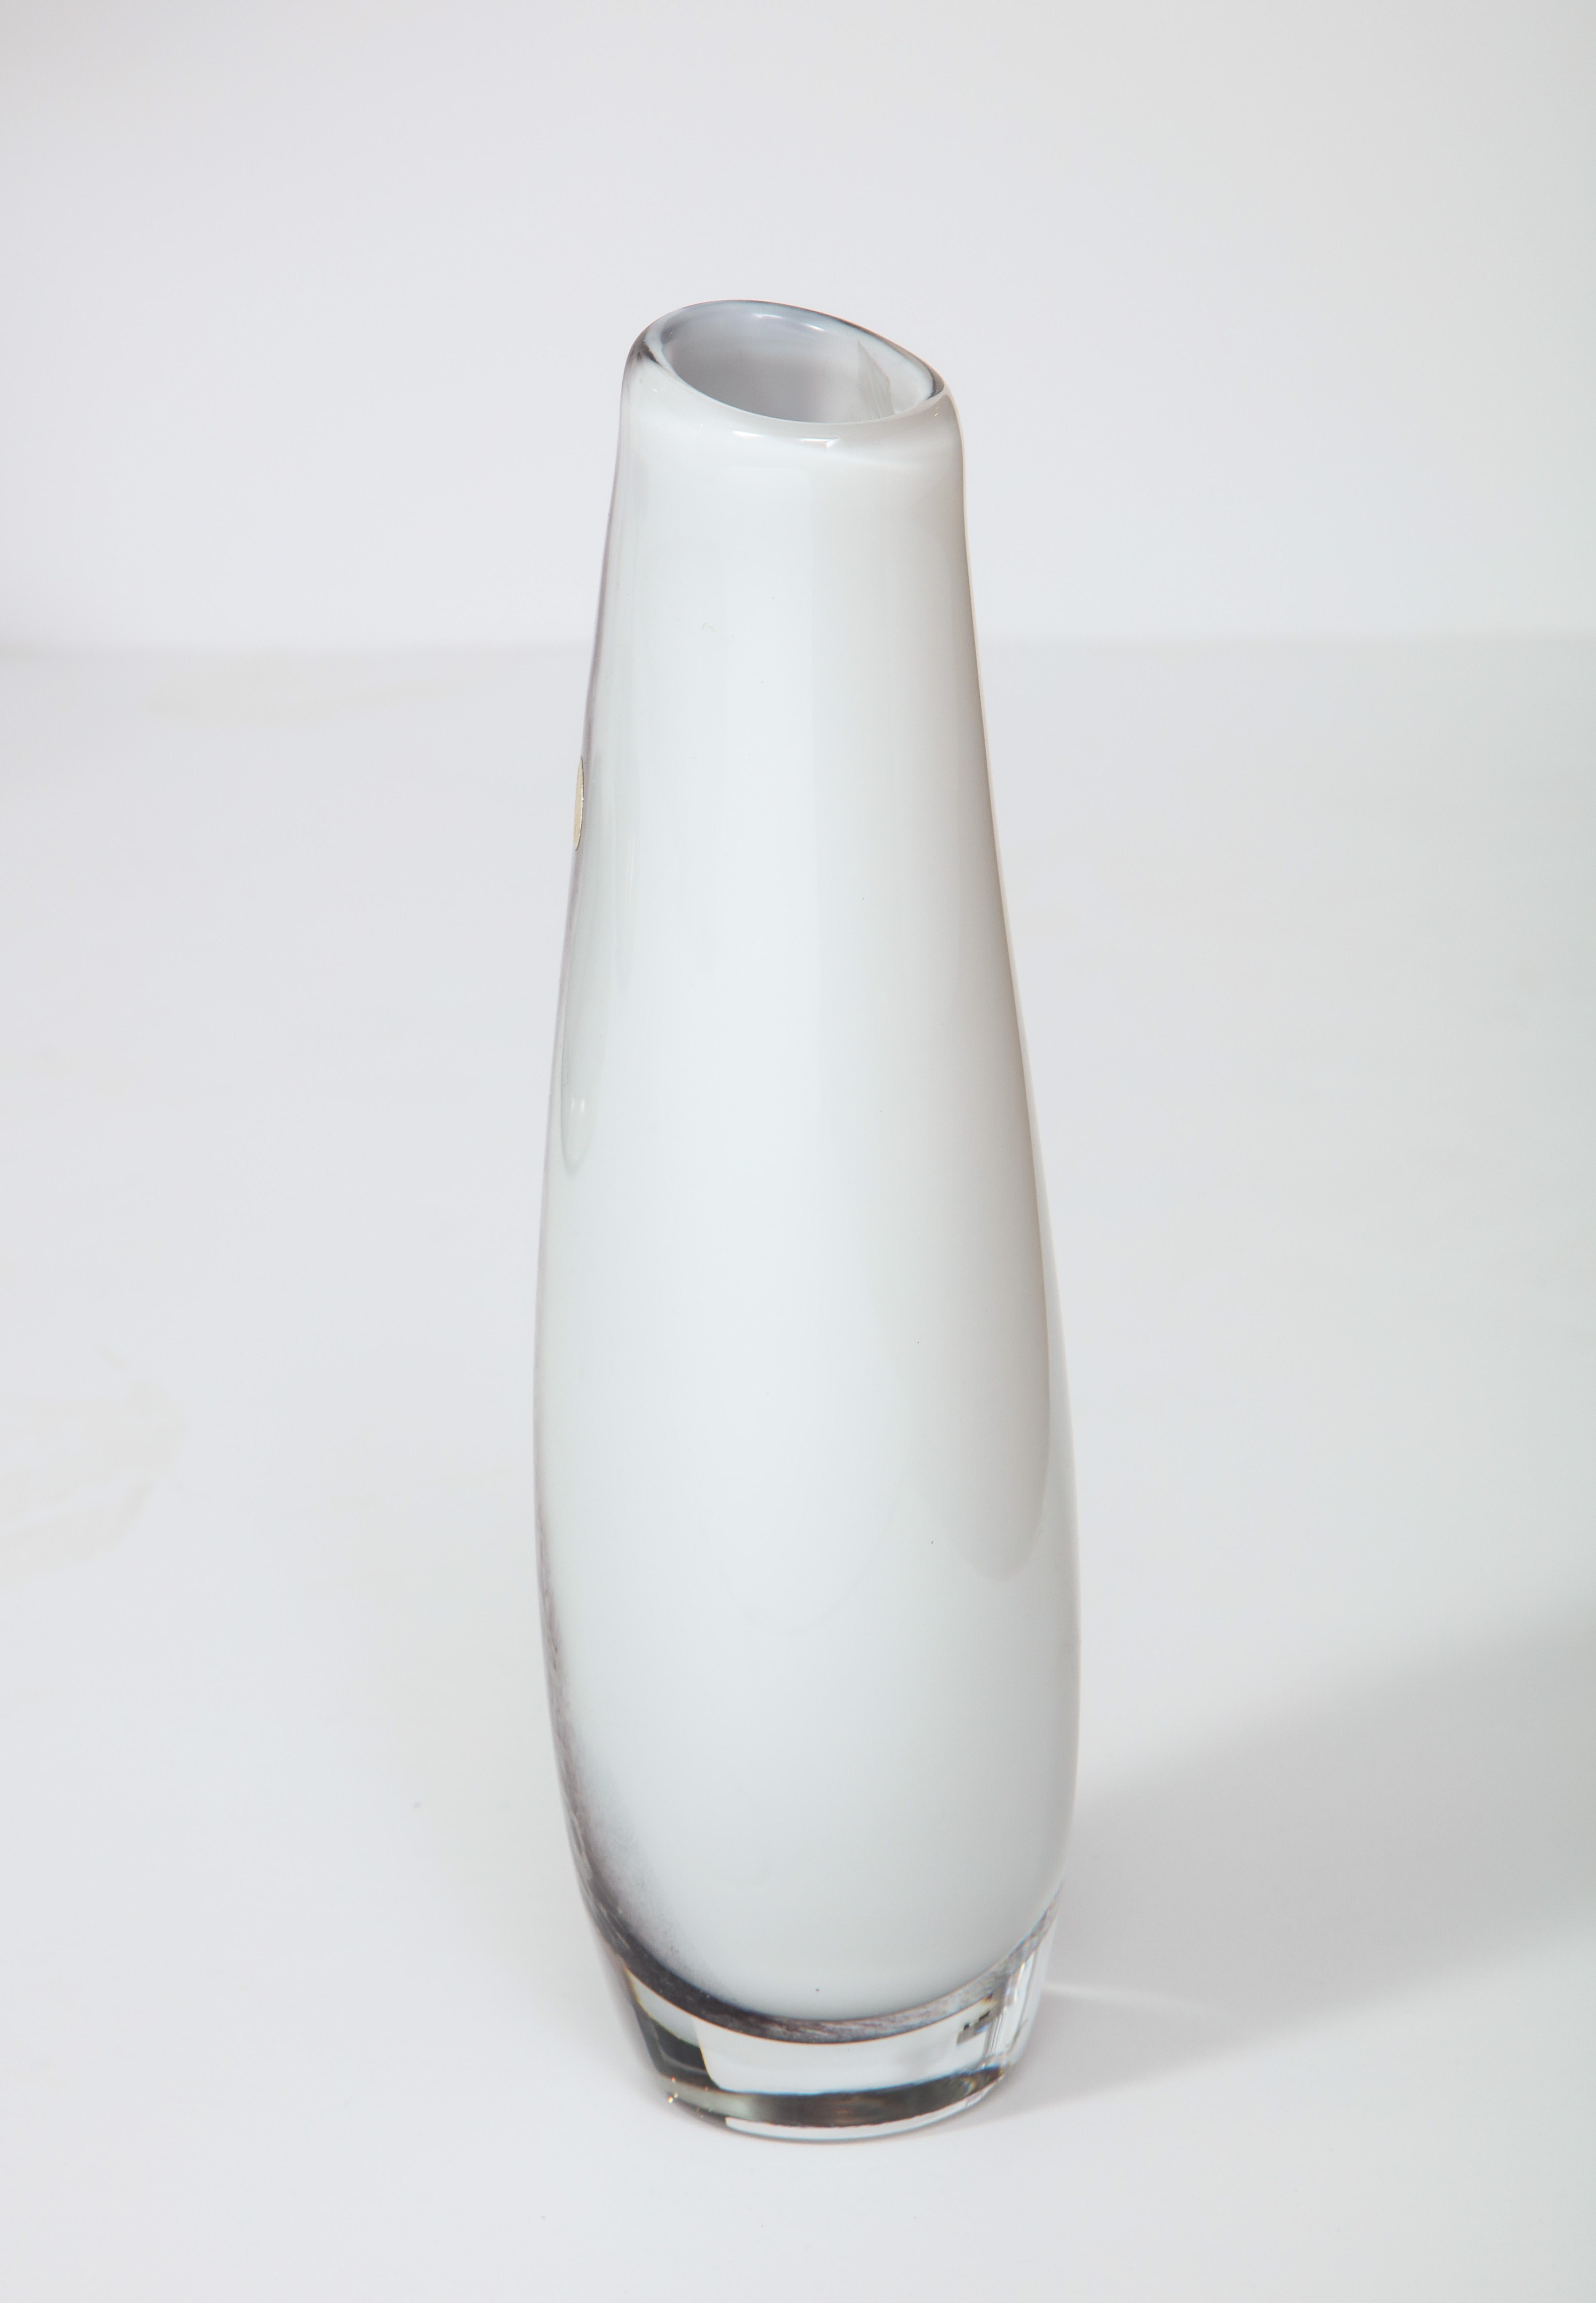 Blown Glass Vase, Midcentury Glass Vase, Scandinavian, White and Chocolate, circa 1950